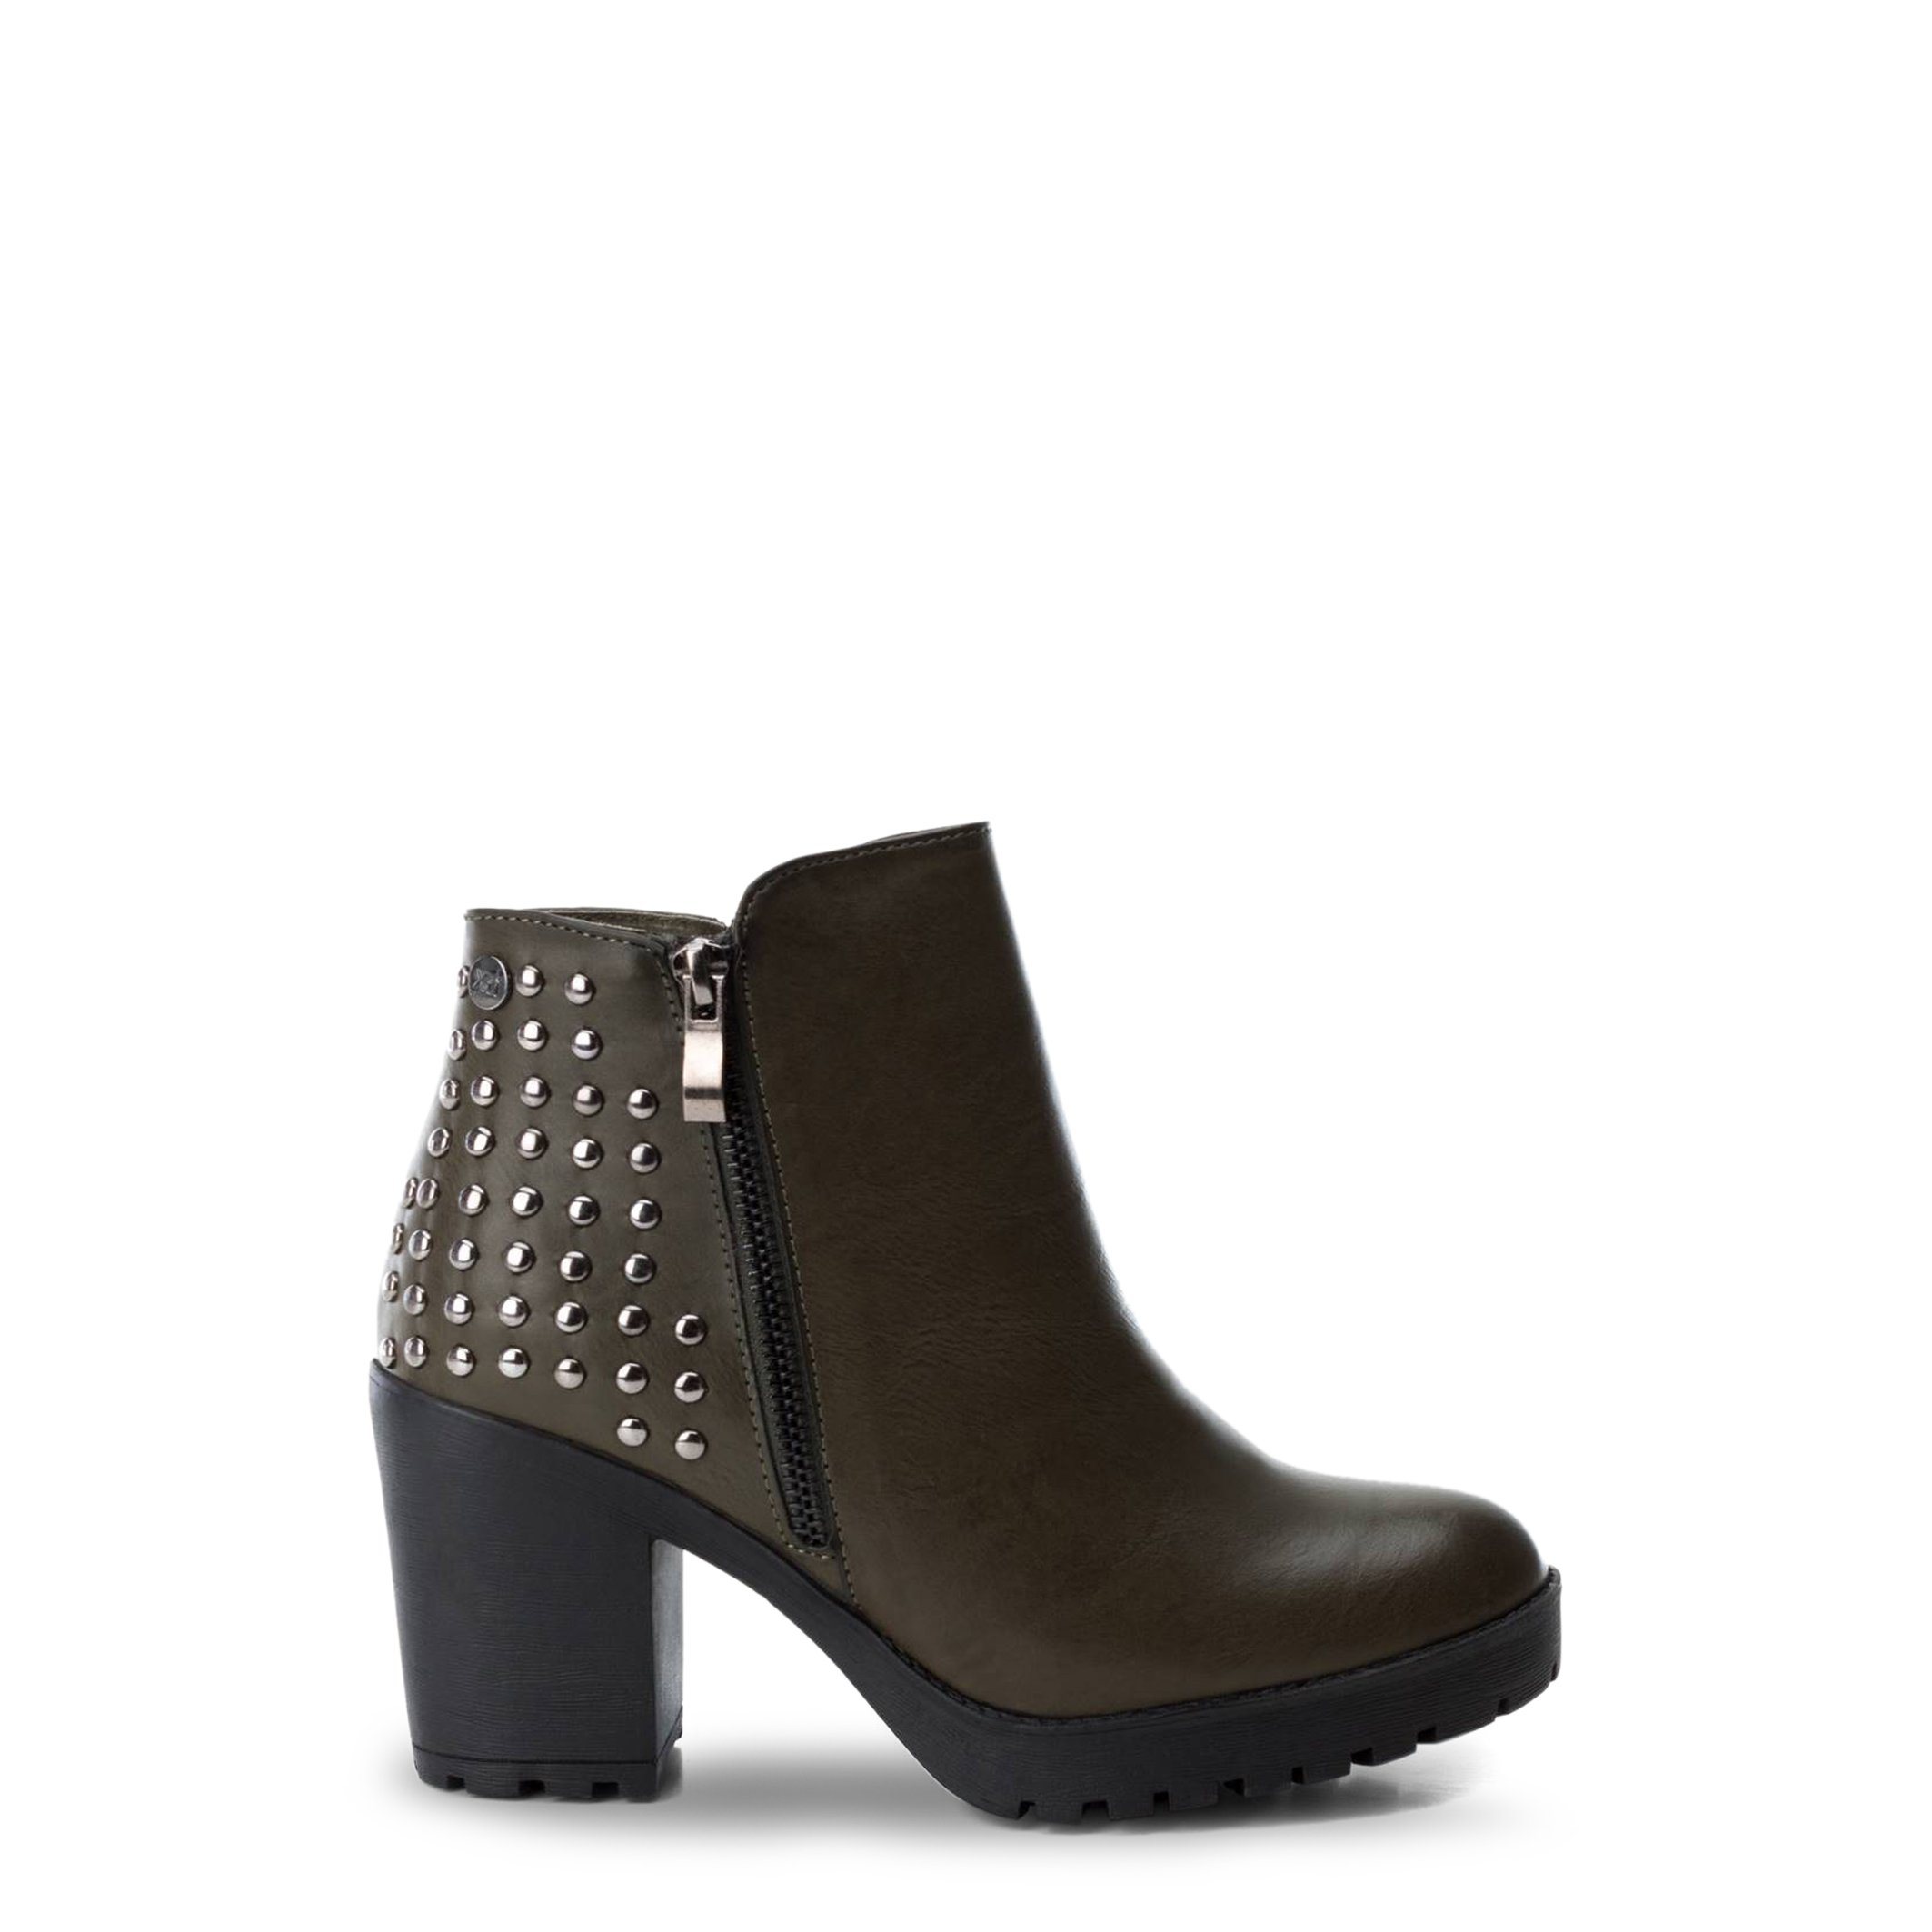 Xti Women's Ankle Boots Grey 48456 - green EU 35